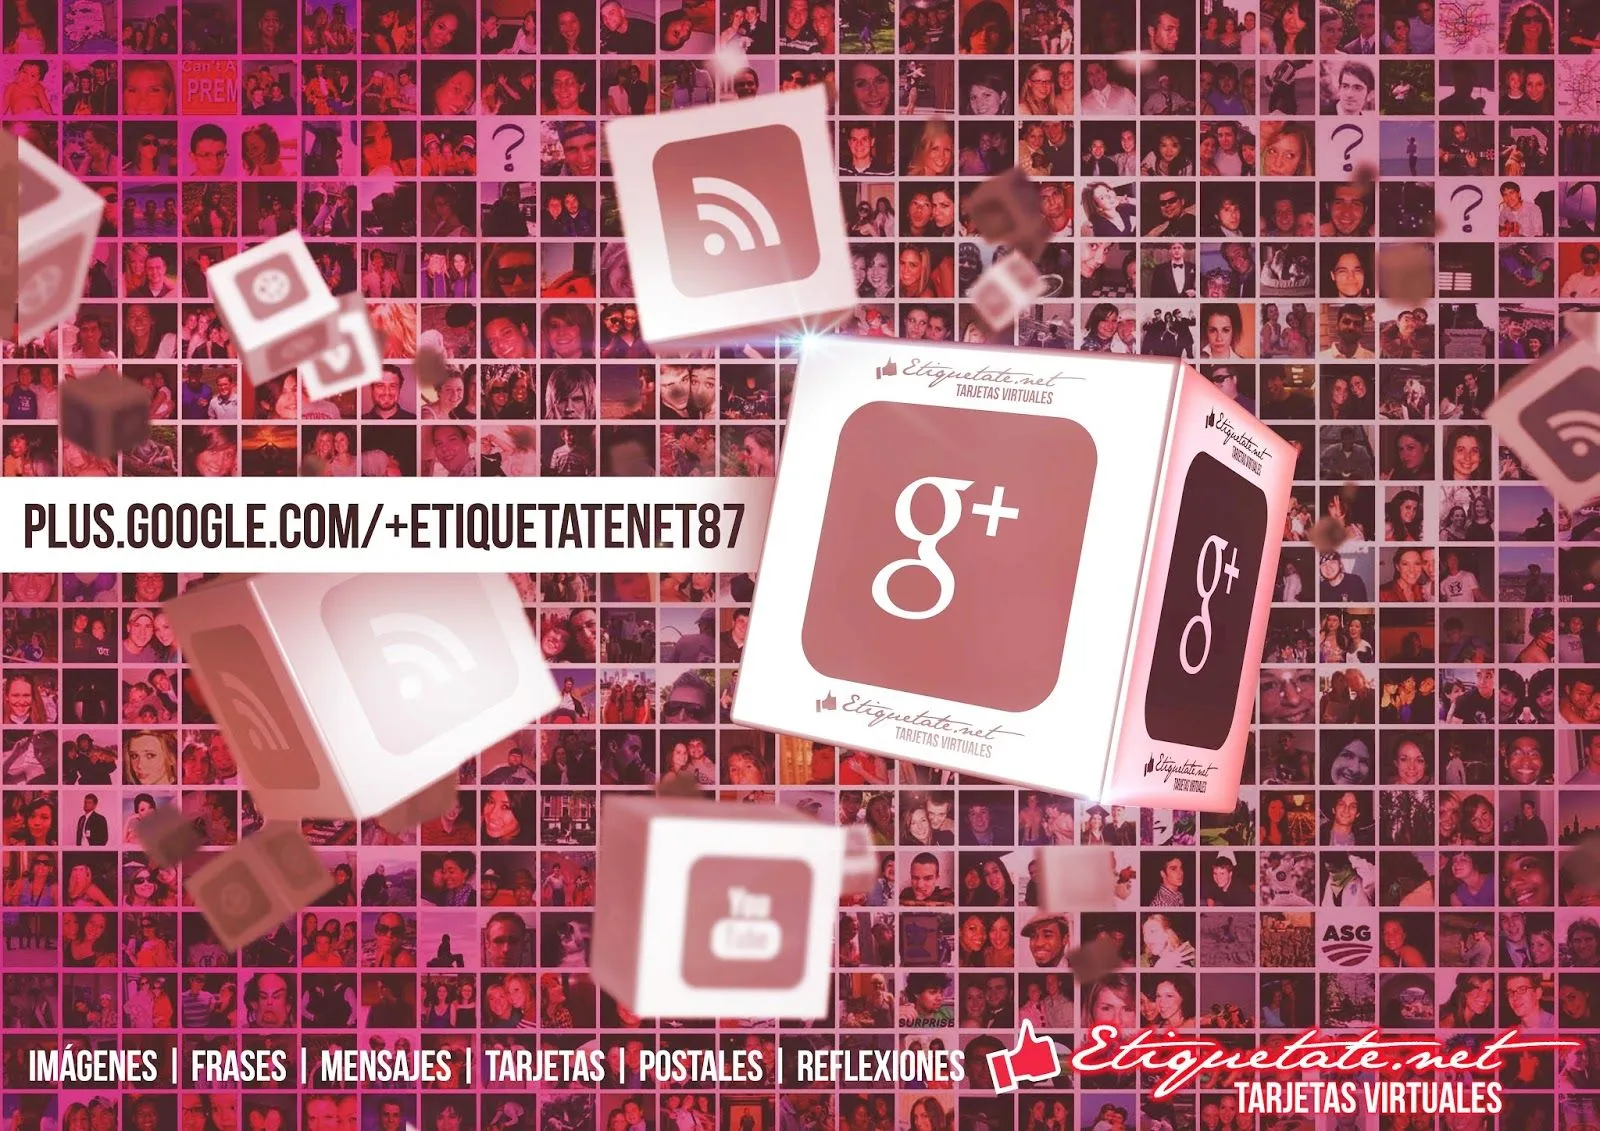 Sígue a ETIQUETATE.NET en las redes sociales .:  Twitter, Facebook, YouTube, Google+, Flickr, Instagram, Pinterest.